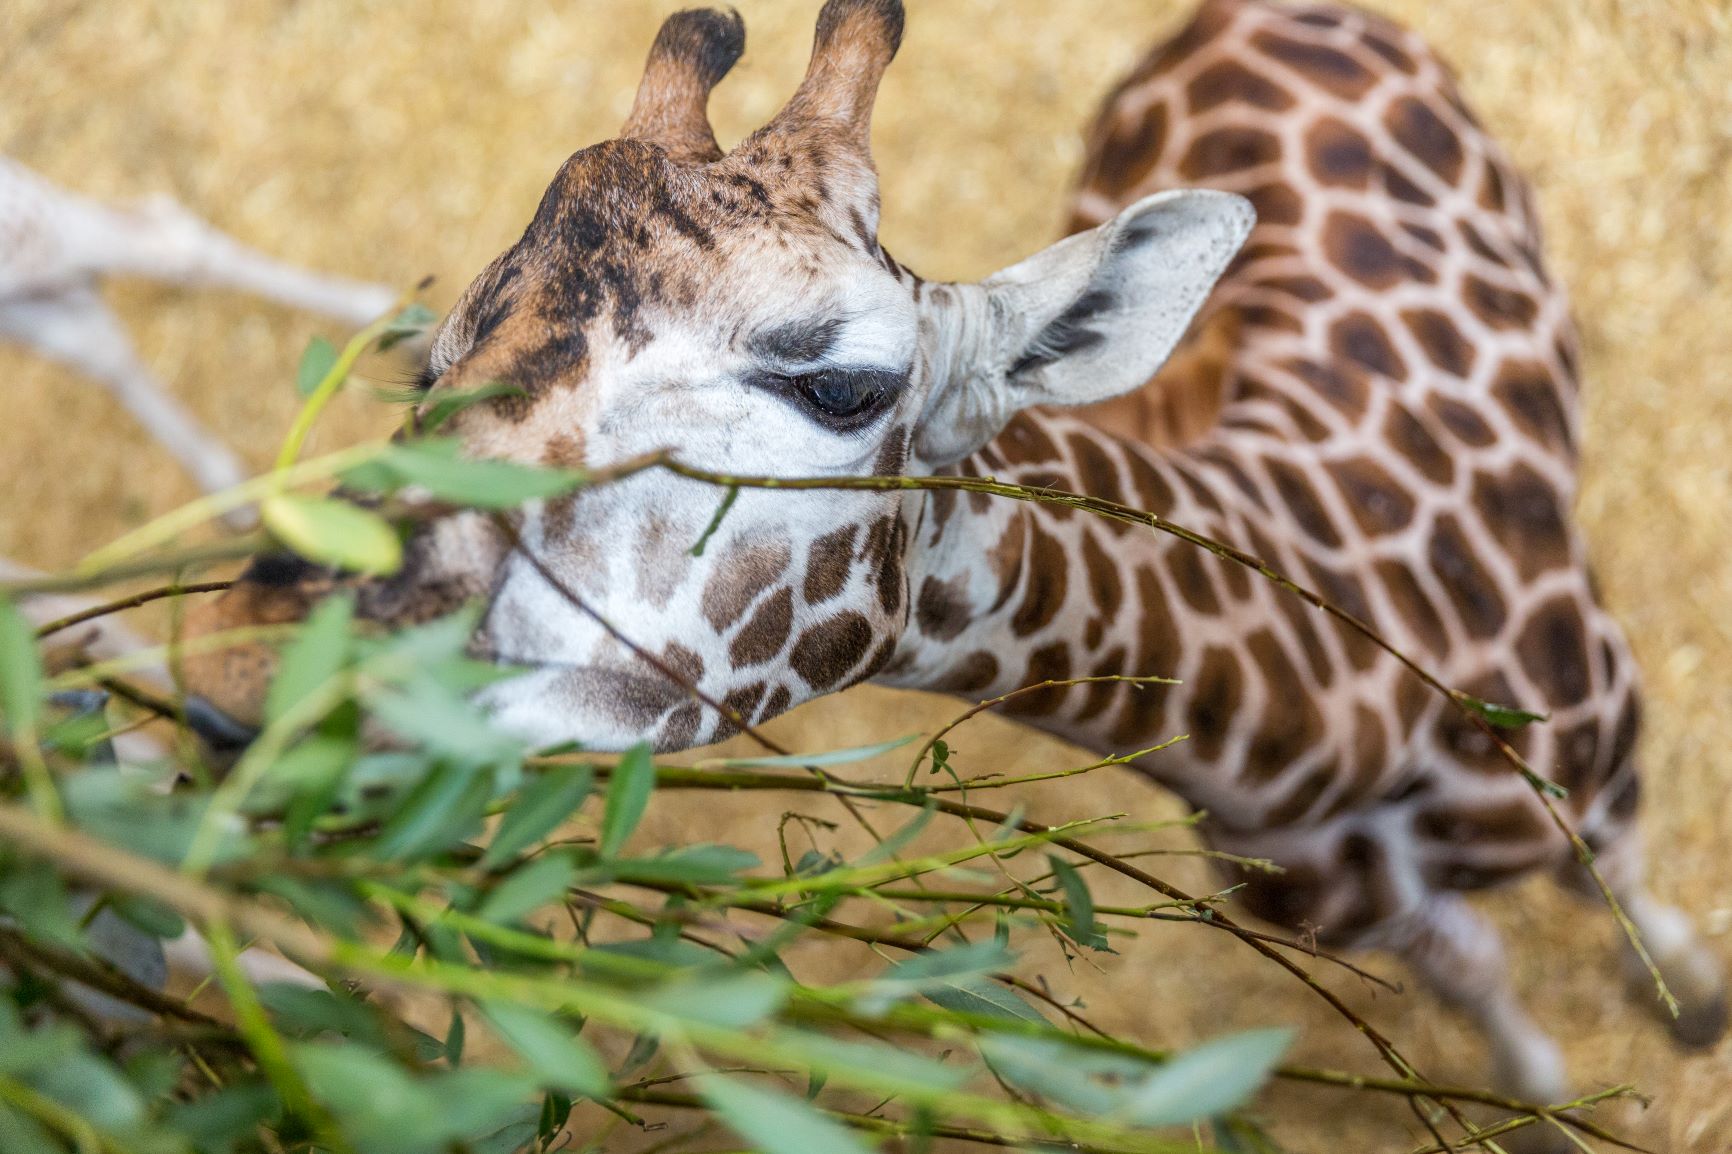 woburn safari giraffe experience